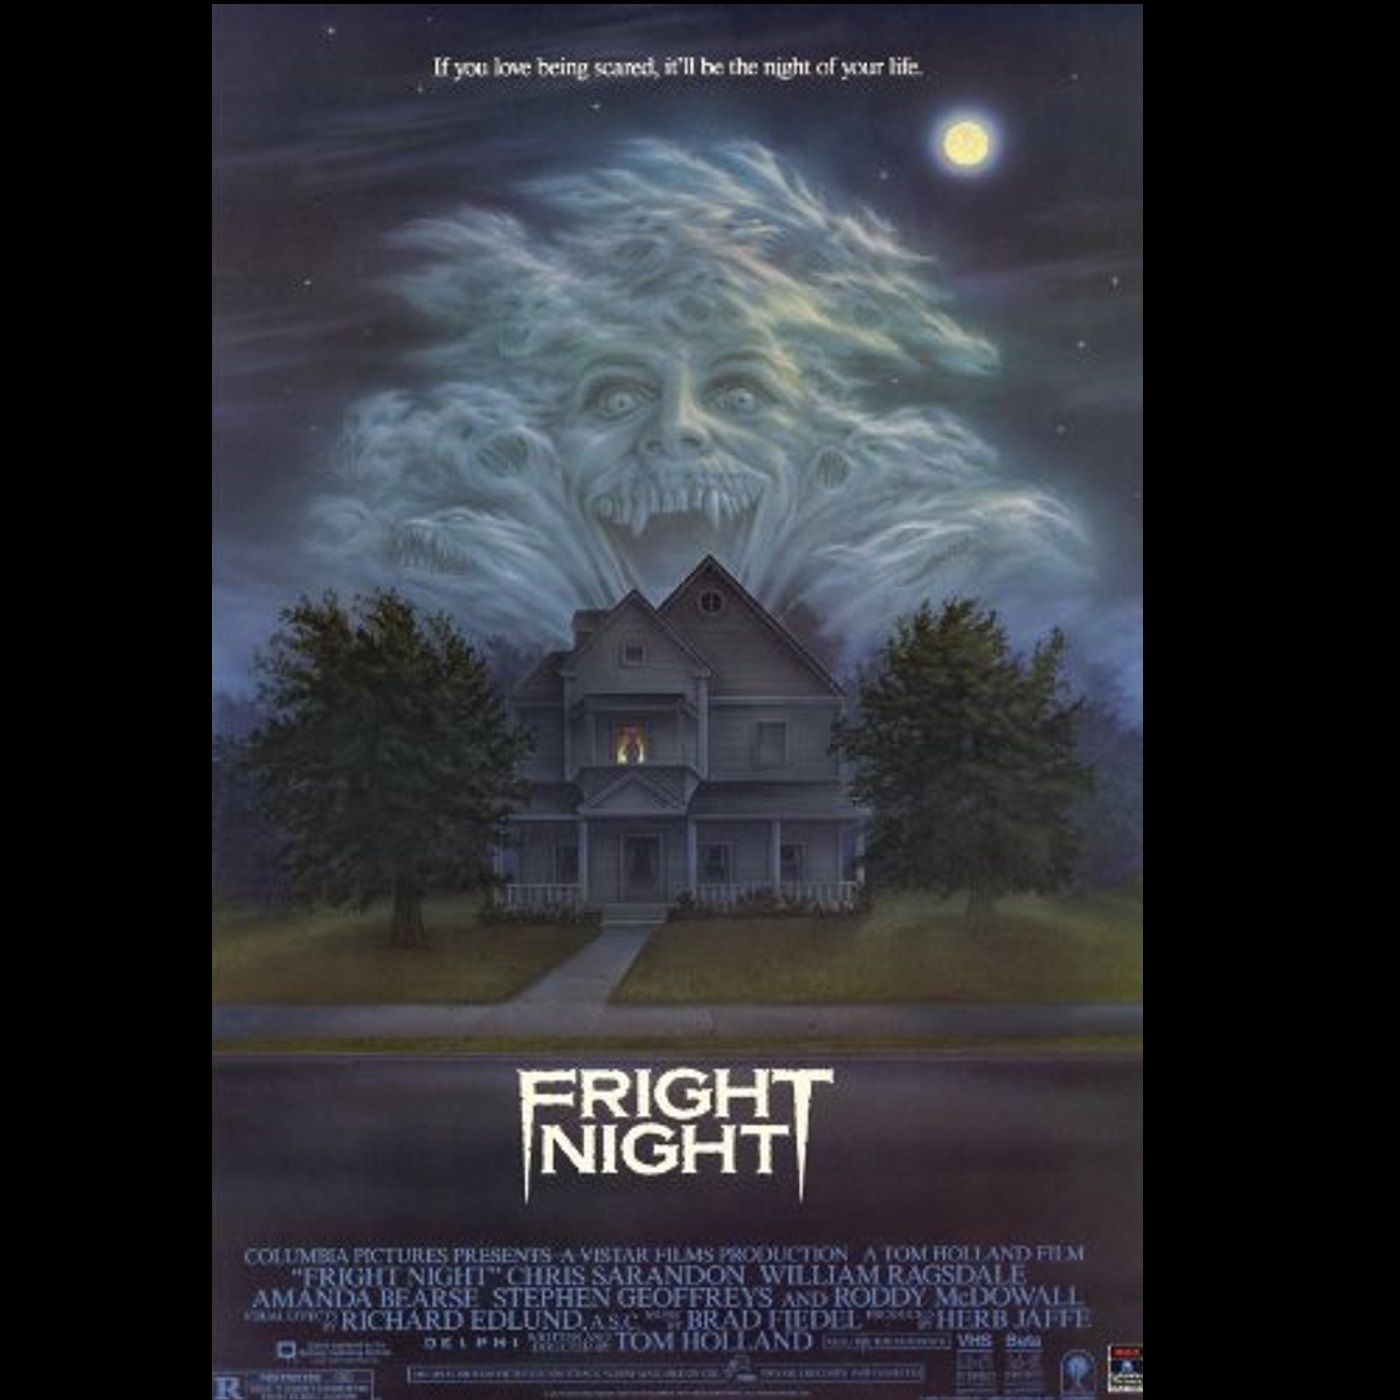 66 Fright Night hero artwork